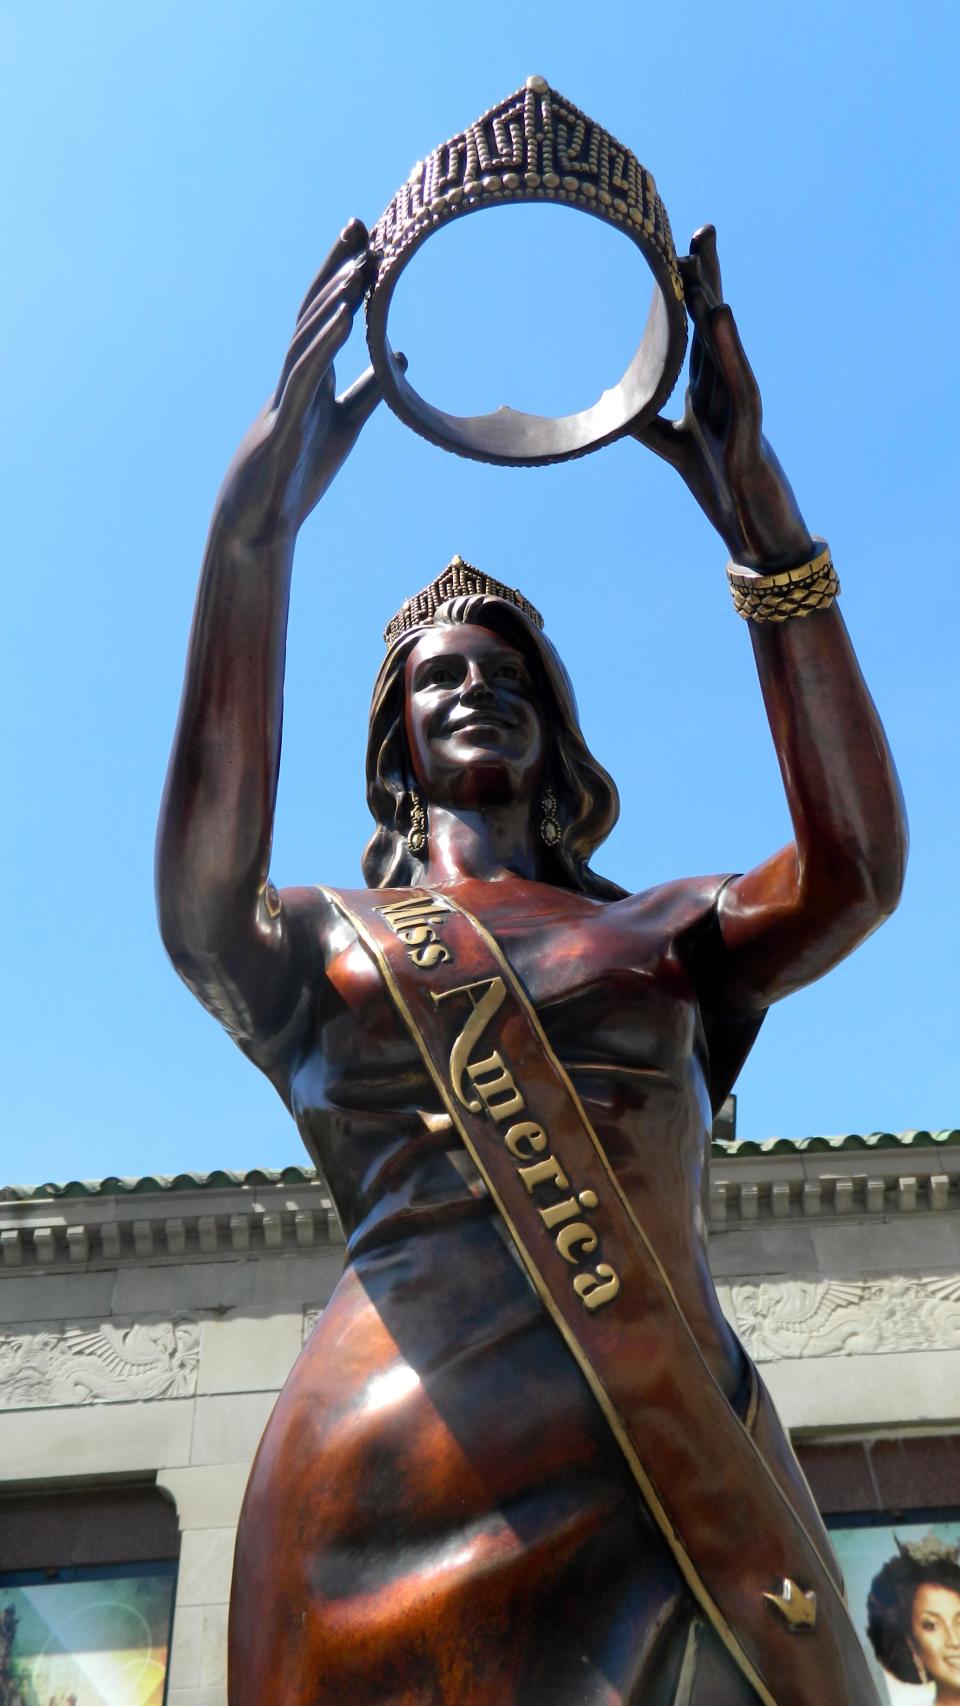 The Miss America statue